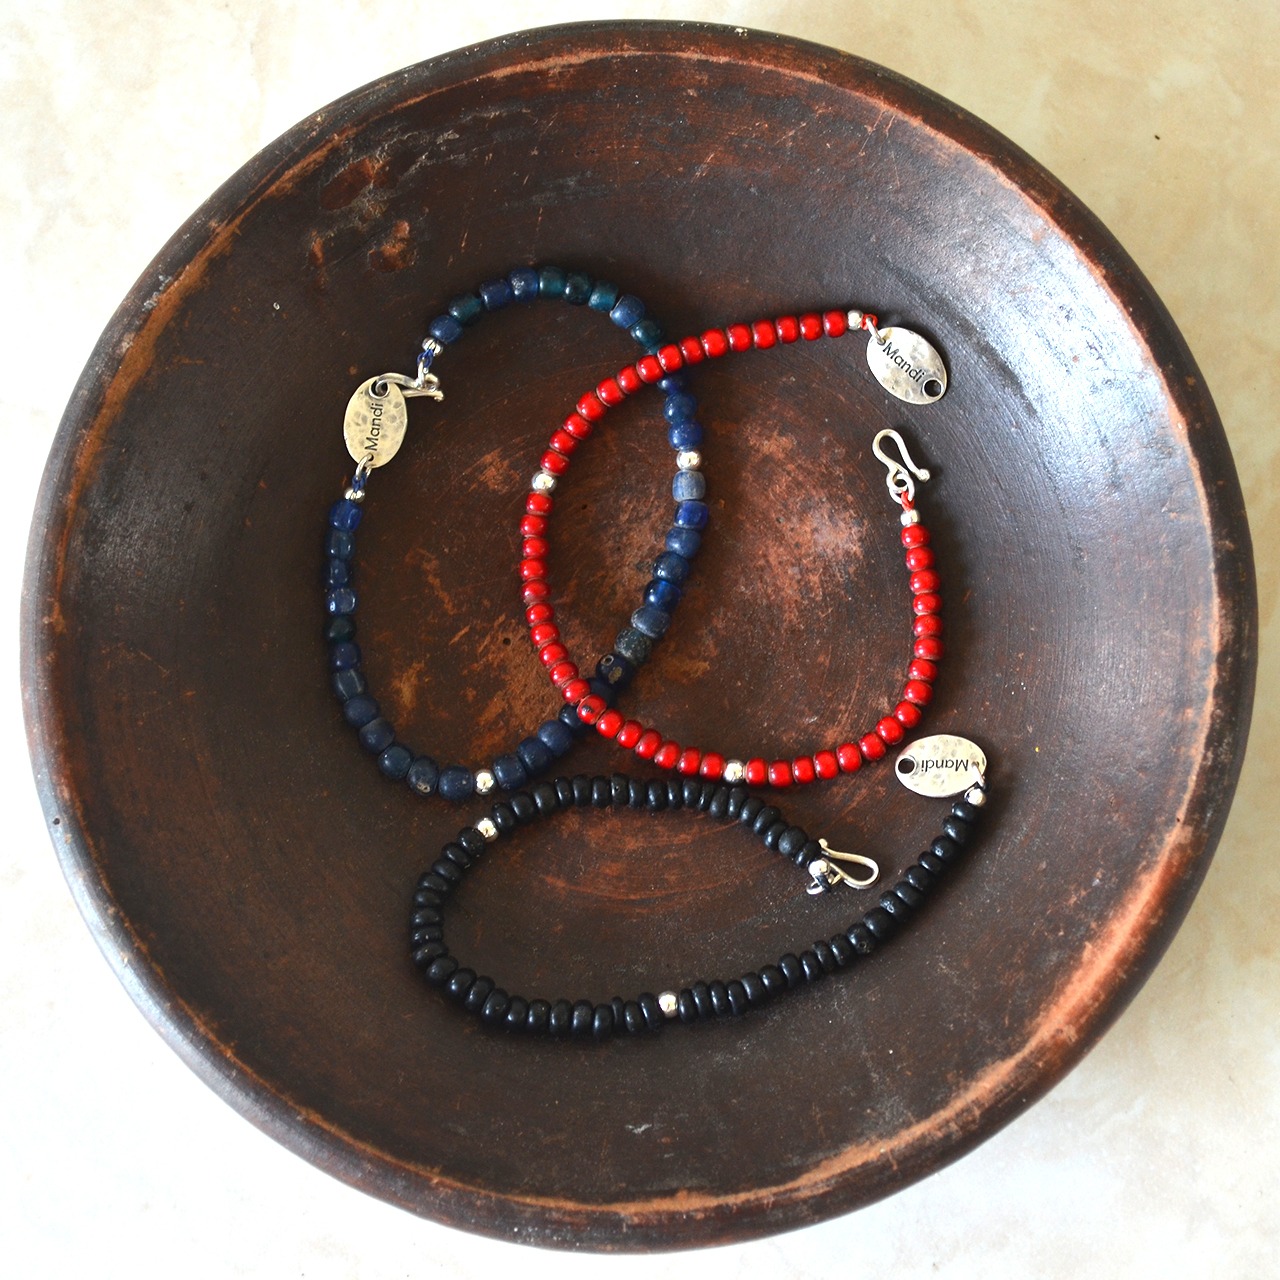 Mandi/マンディ Antique Beads Bracelet(Navy/Black)